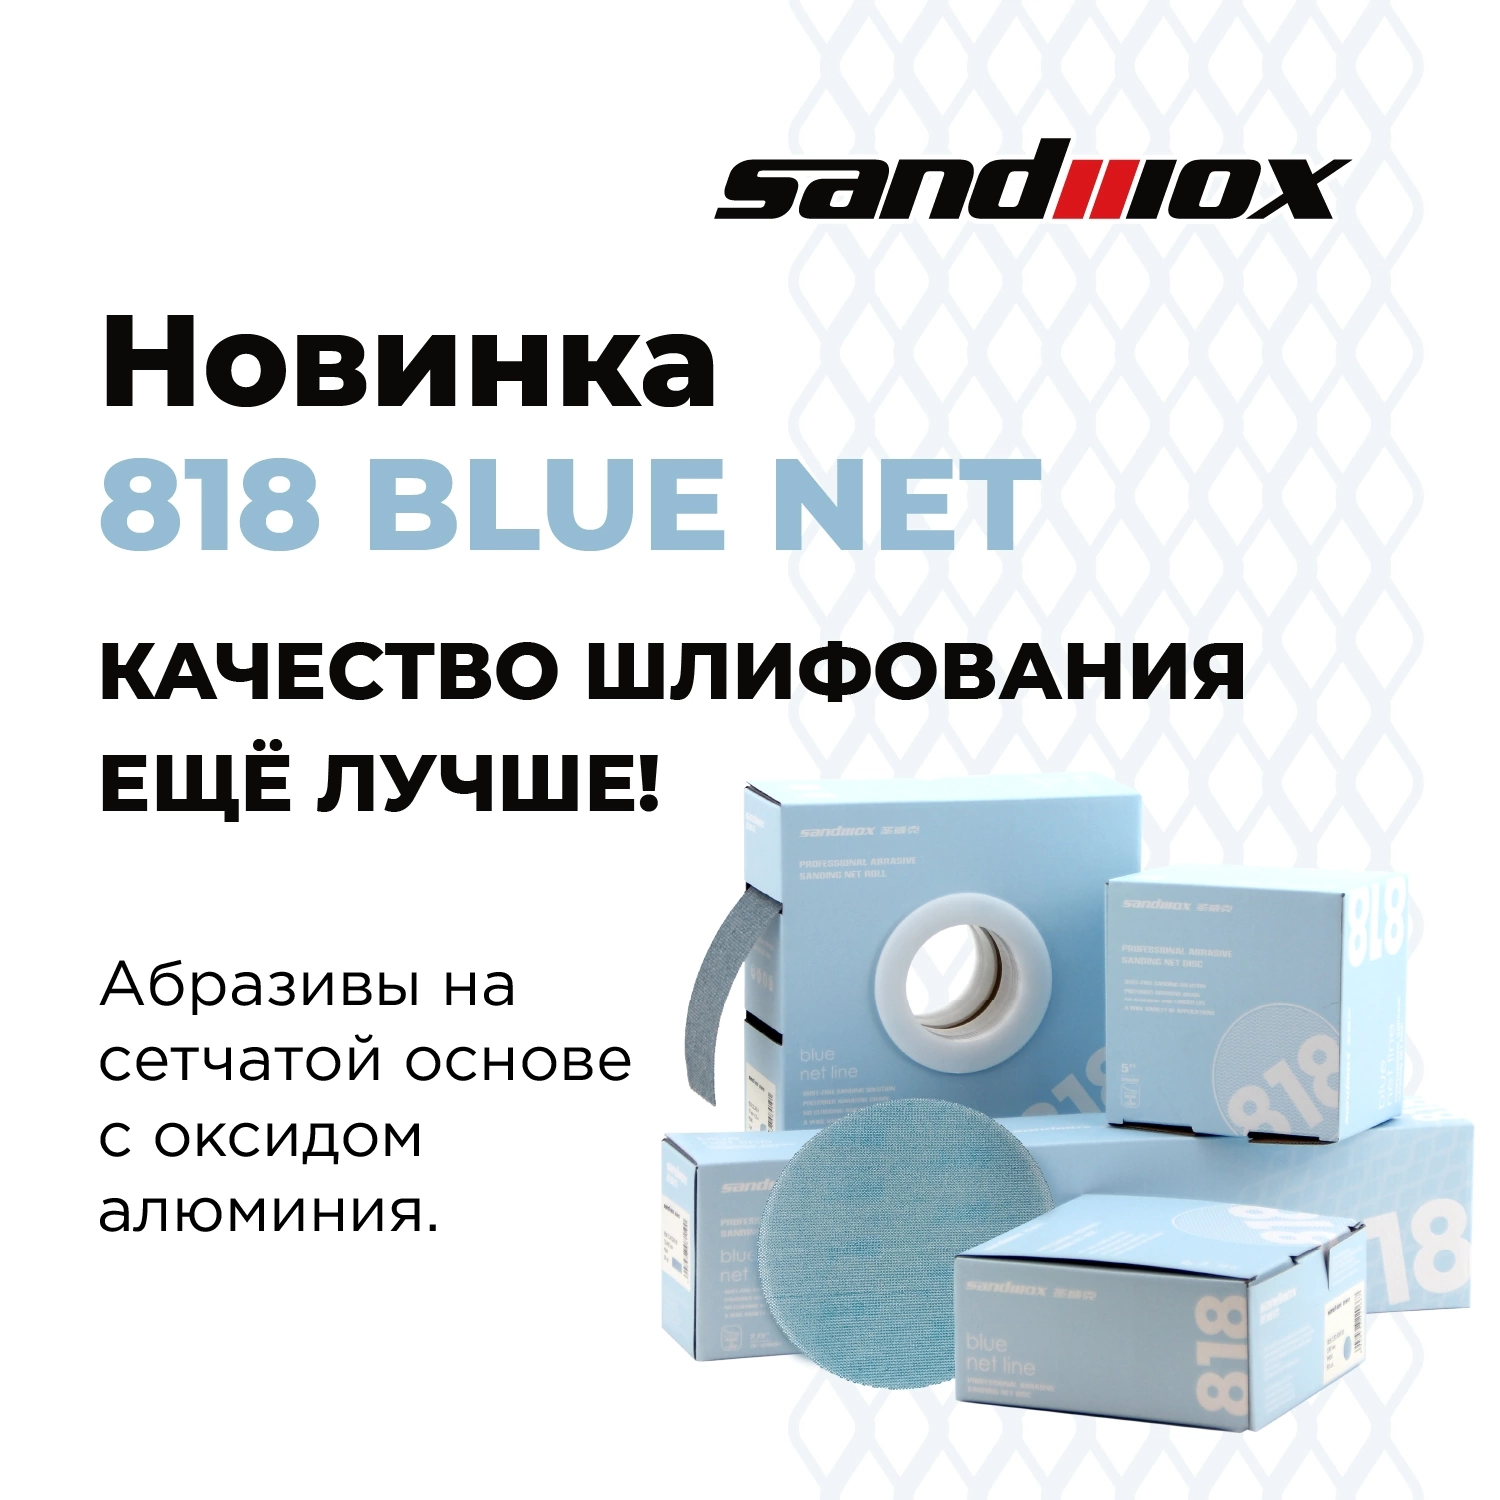 Новинка! Абразивы на сетке от Sandwox - 818 Blue Net Line